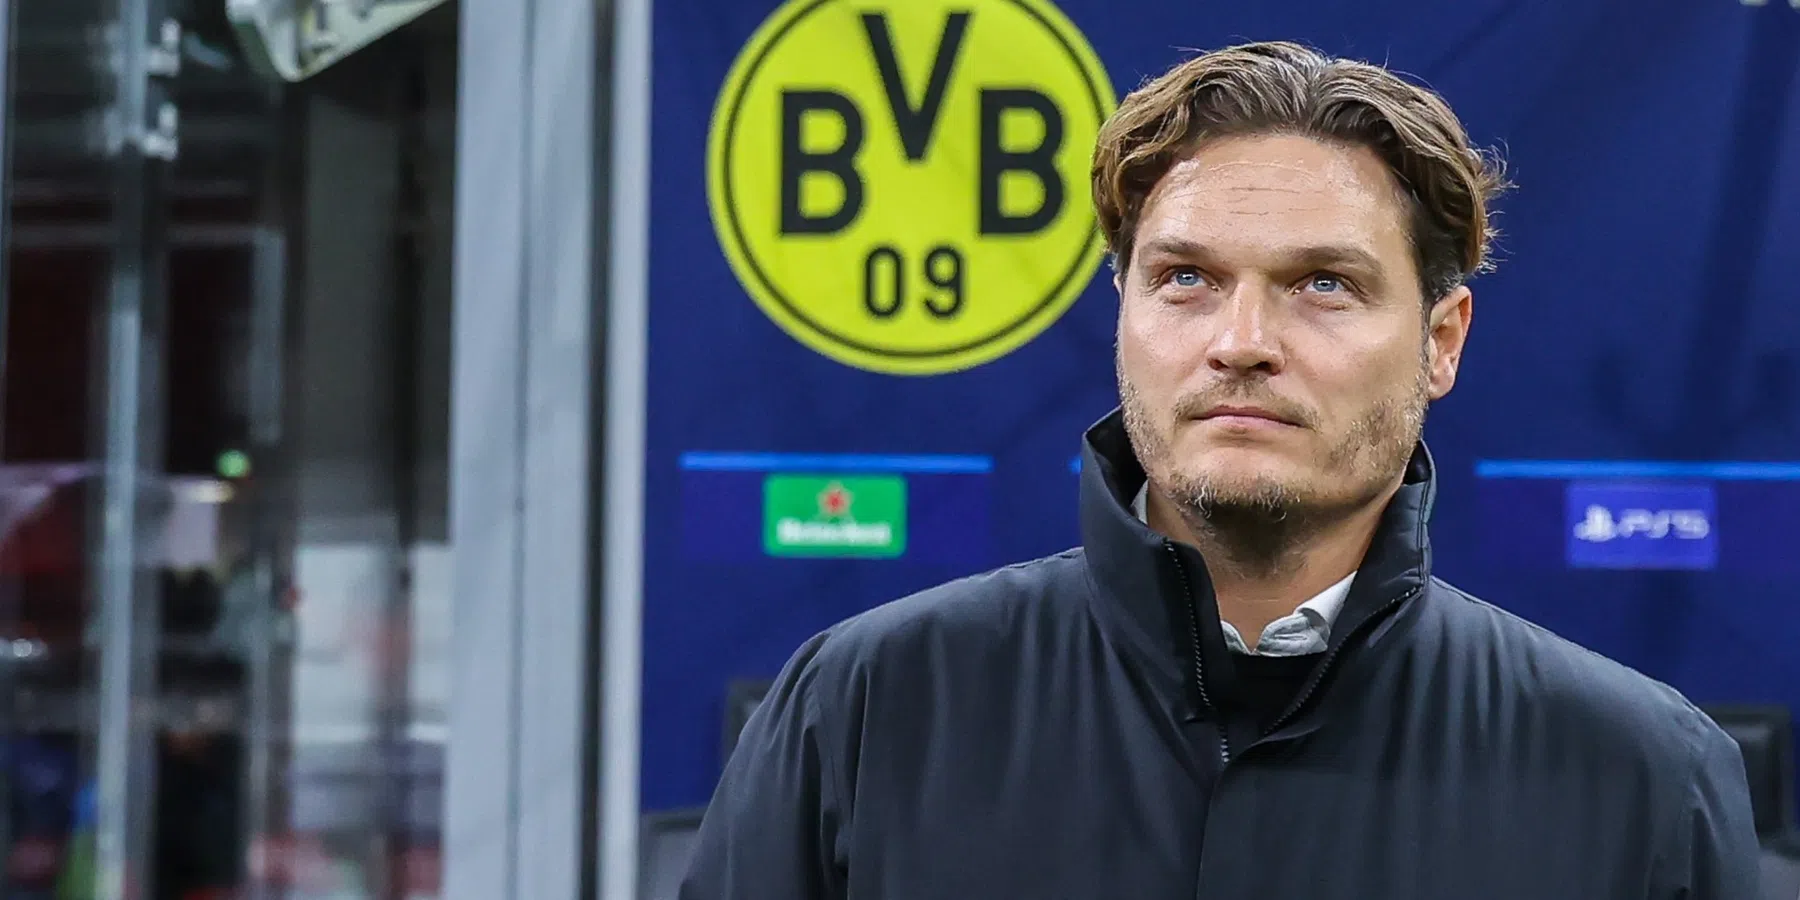 Vermoedelijke opstelling Borussia Dortmund tegen PSV in de Champions League